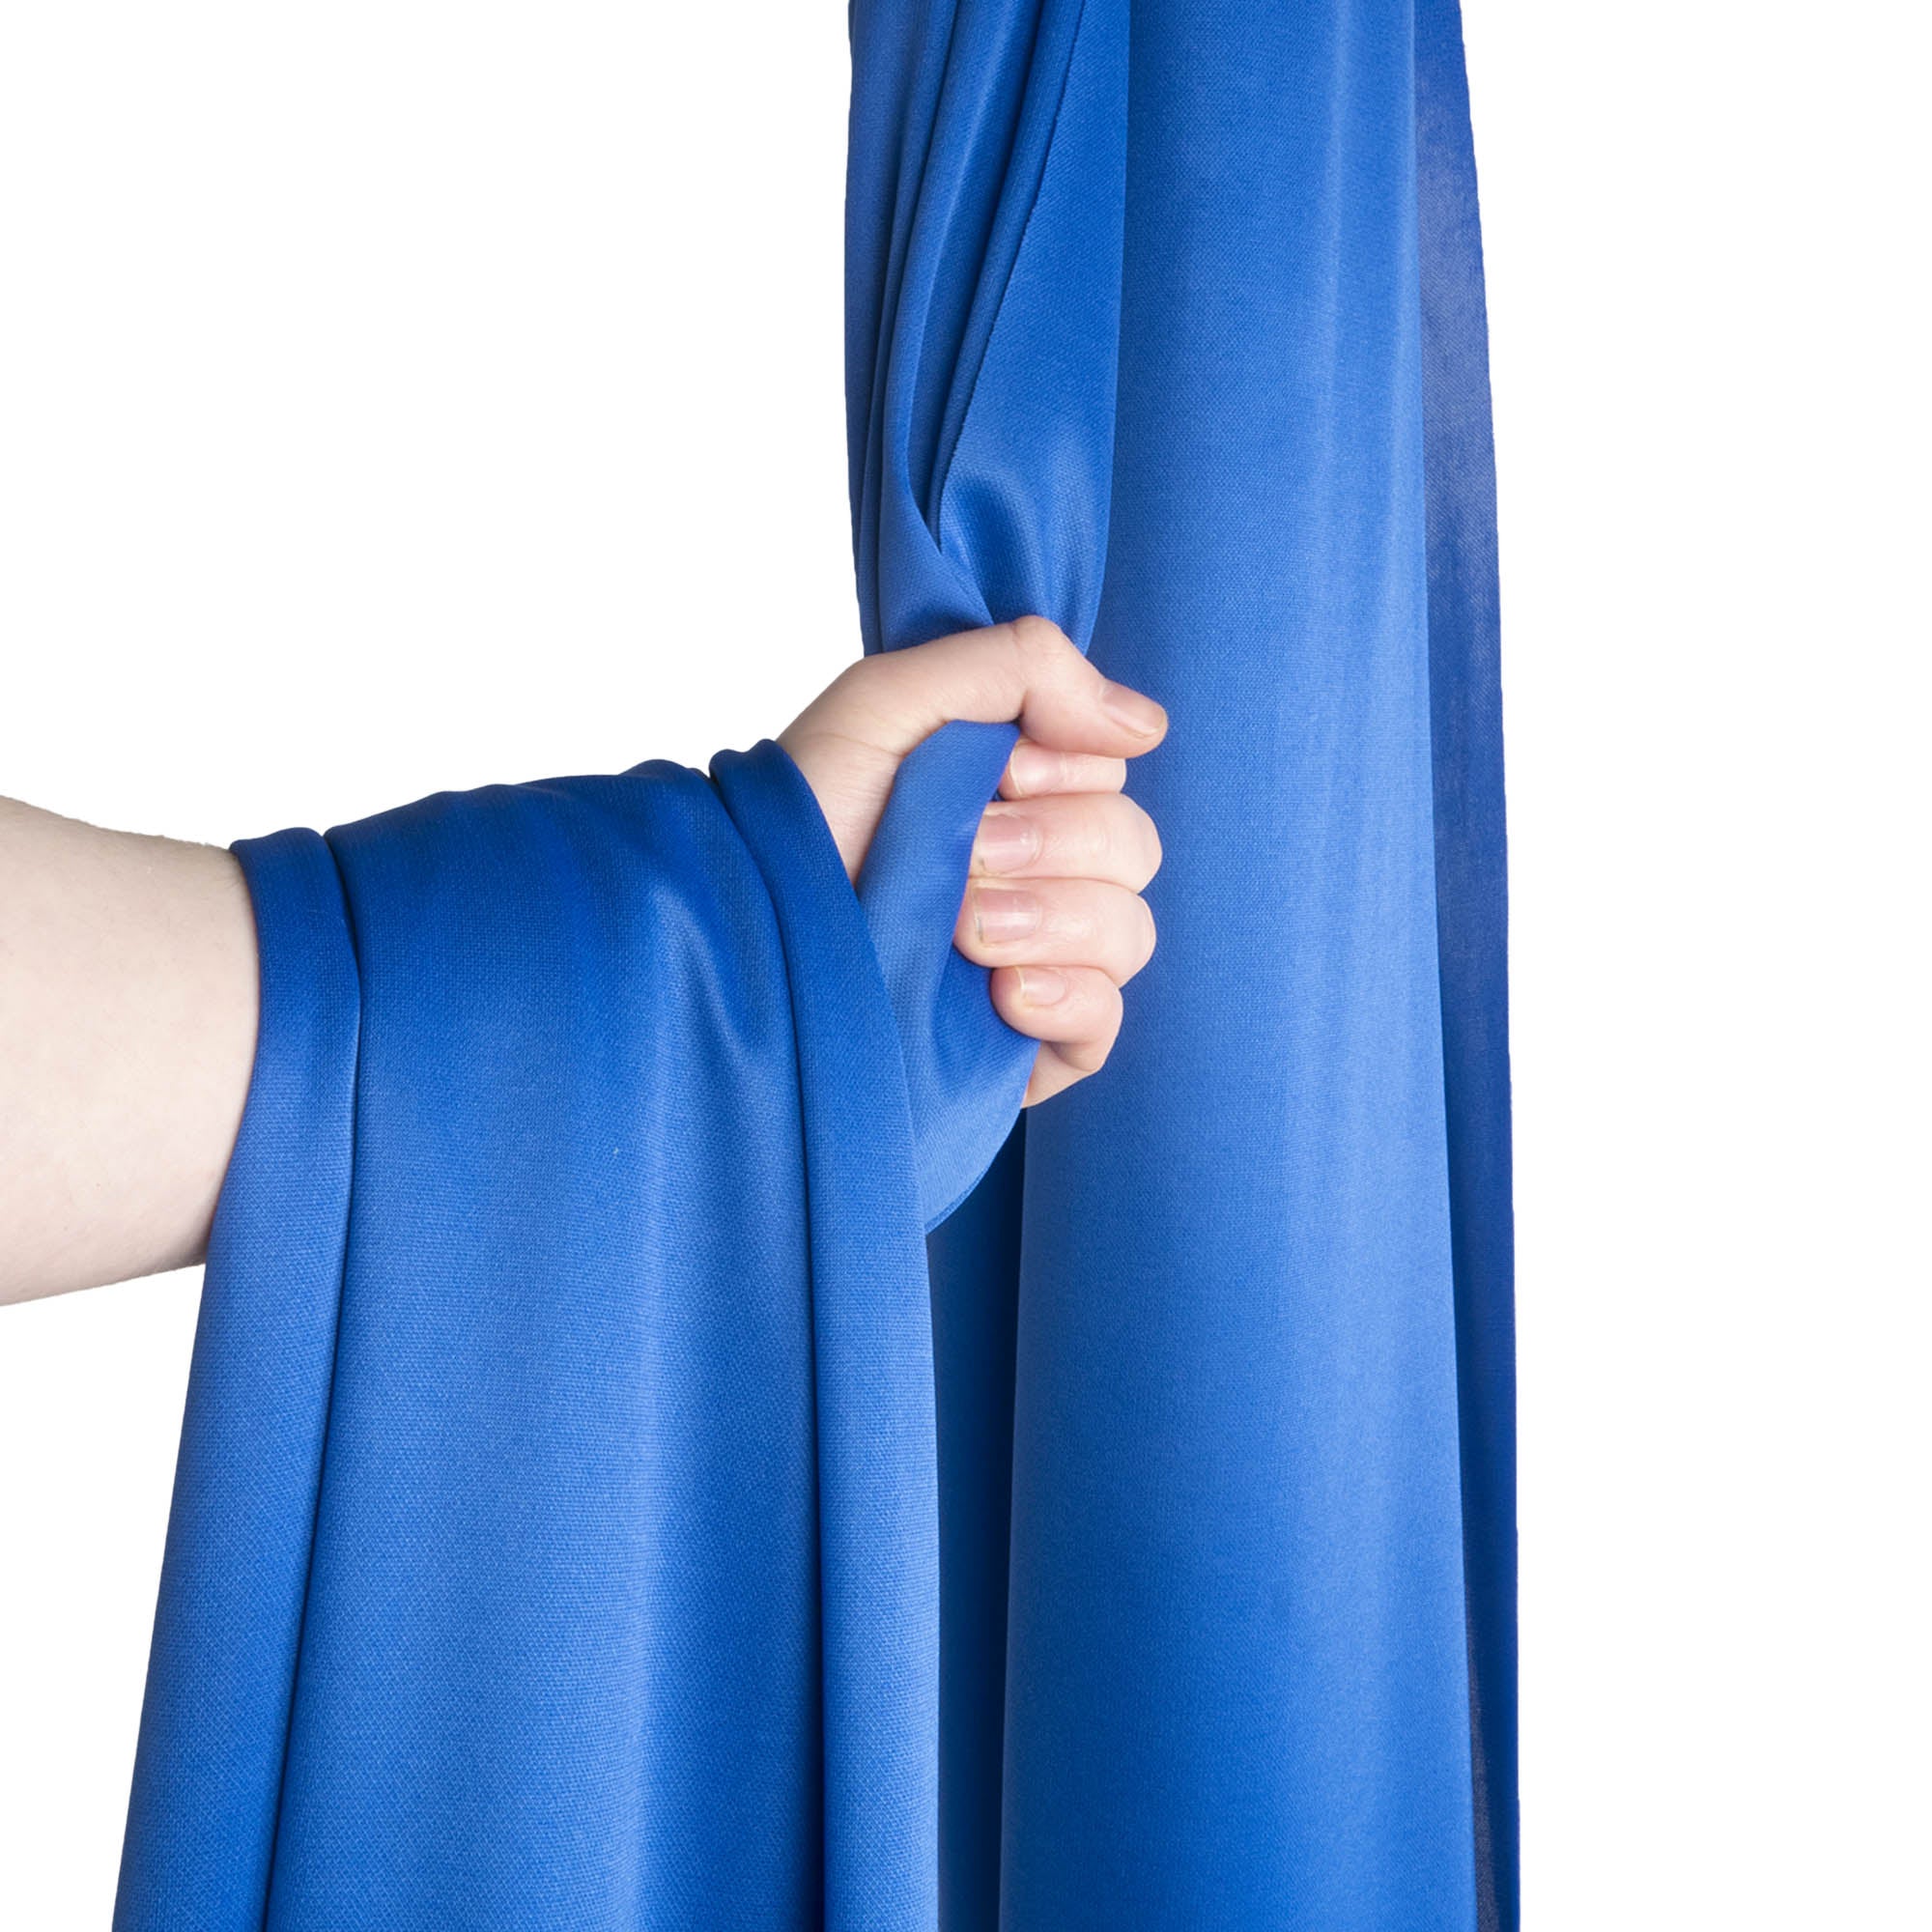 Blue silk wrapped around hand